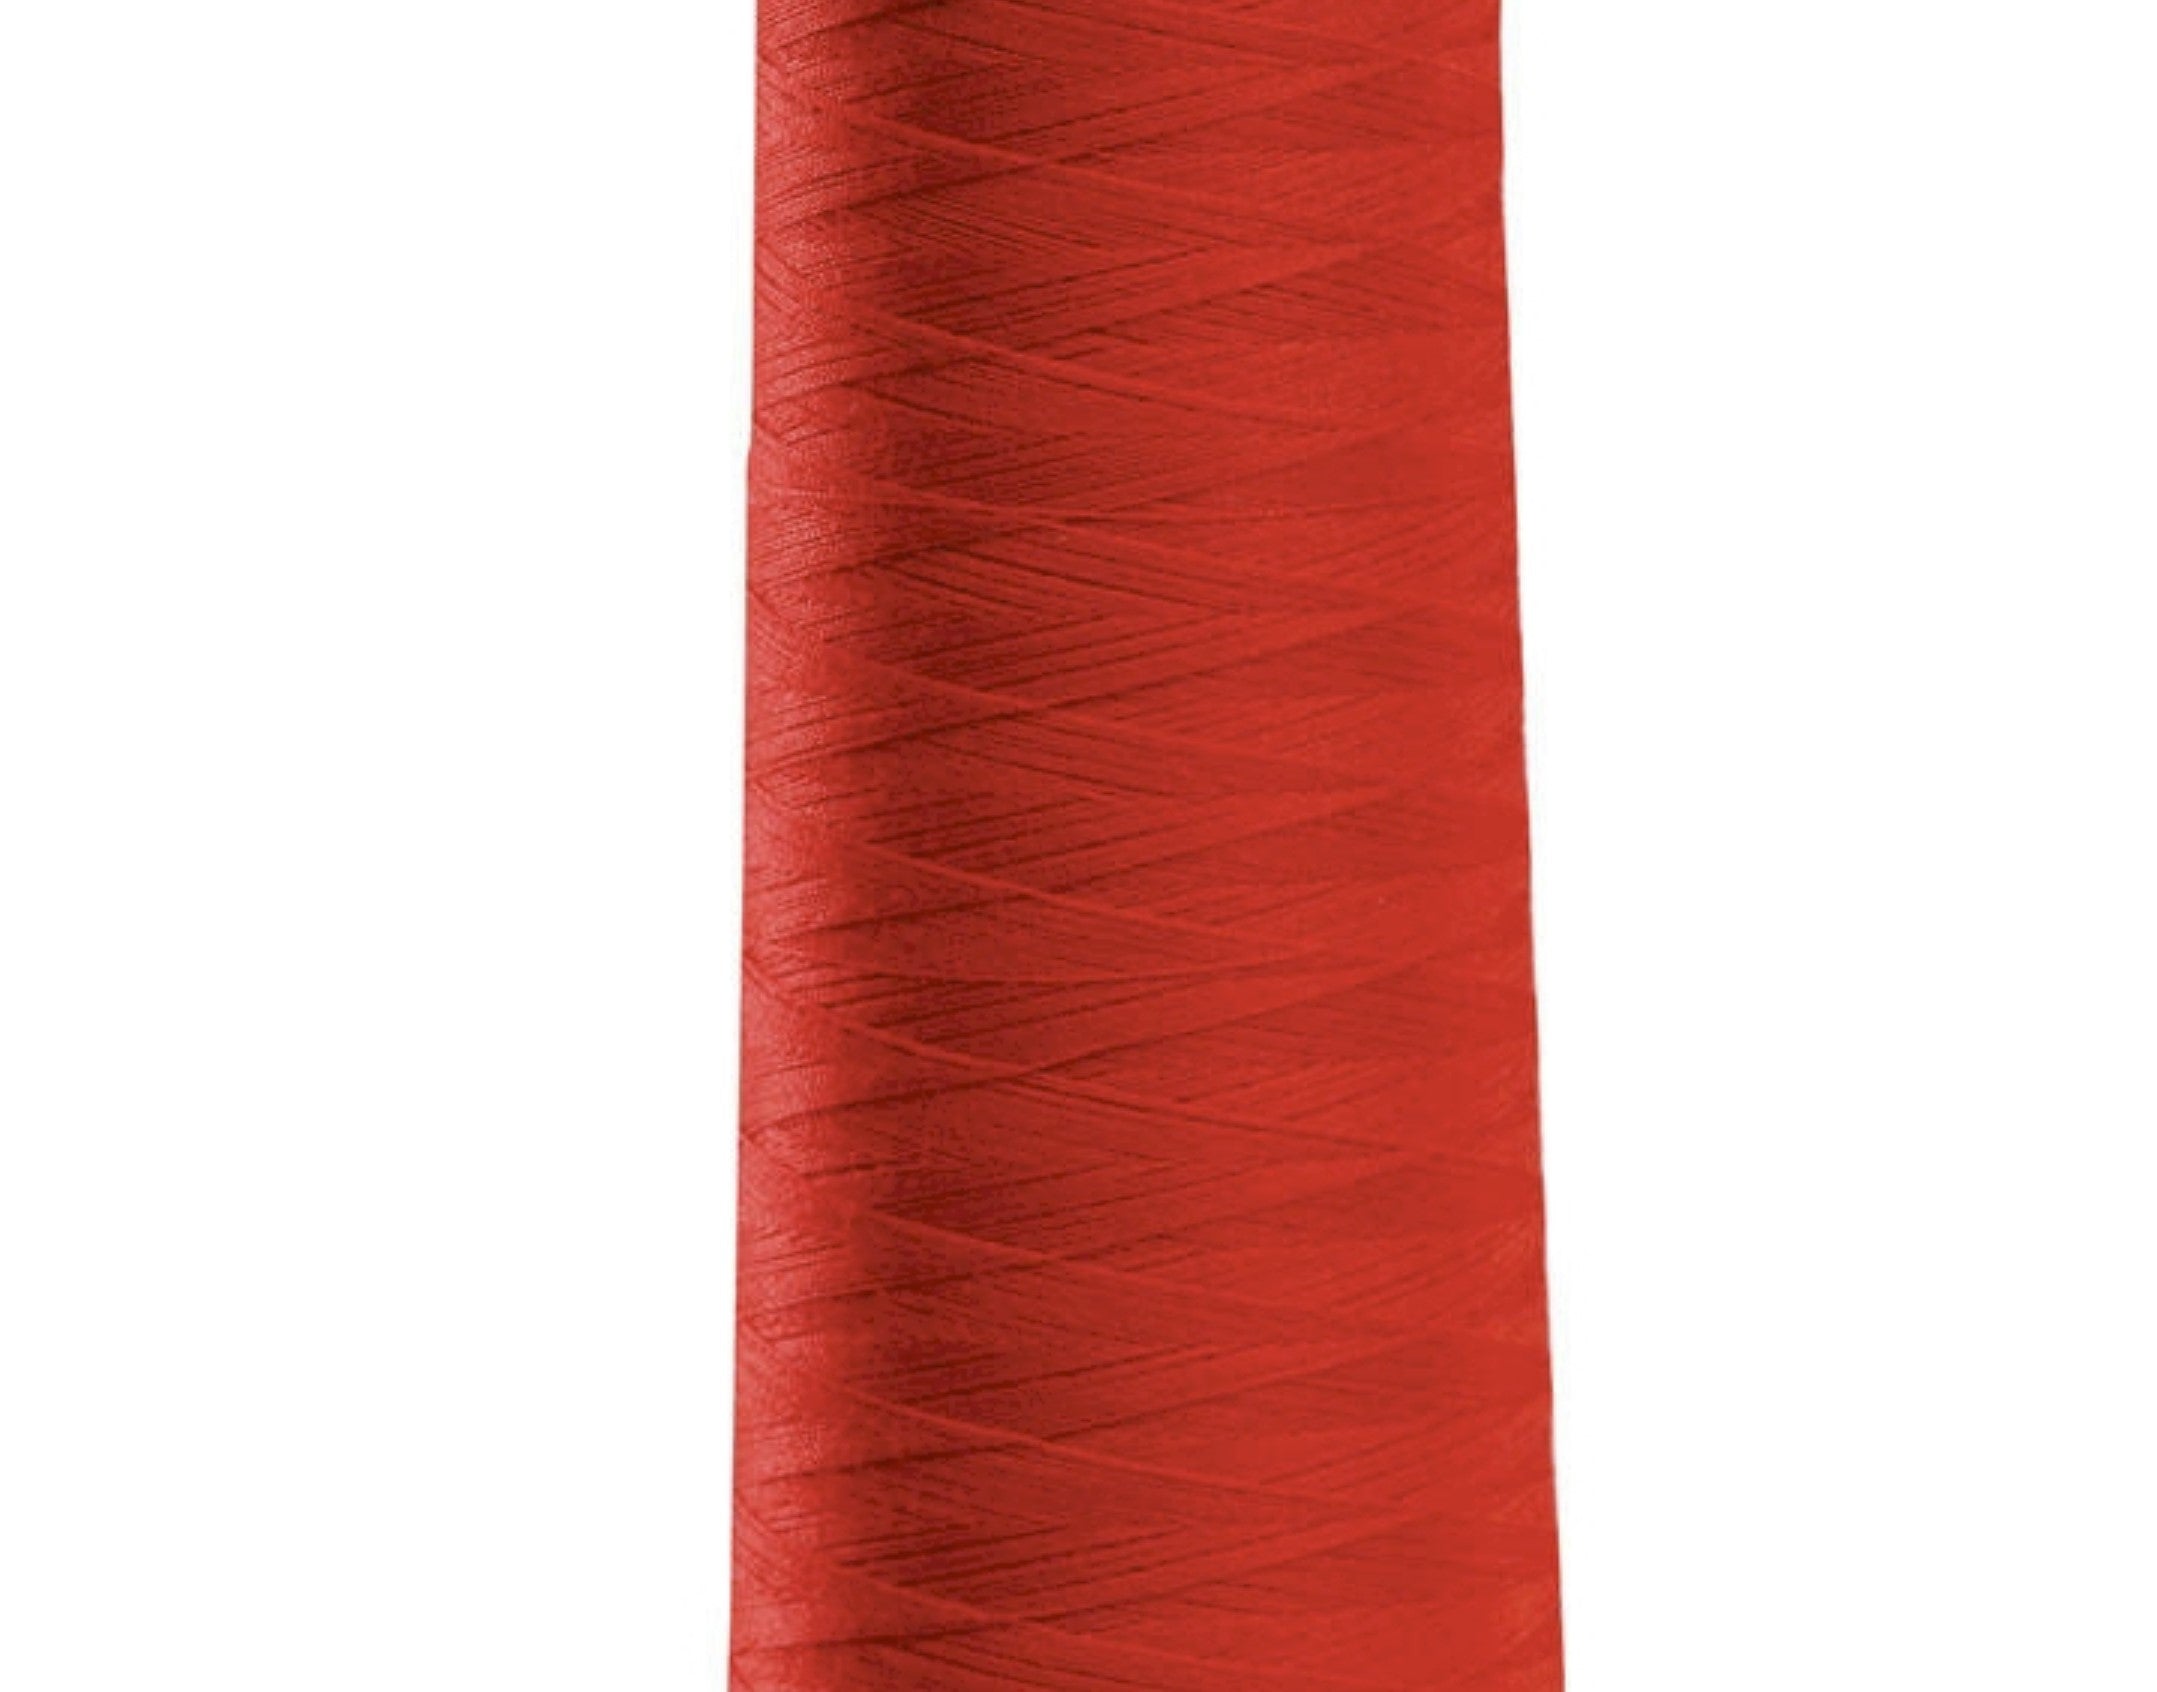 Red Color, Aerolock Premium Serger Thread, Ref. 8380 by Madeira®